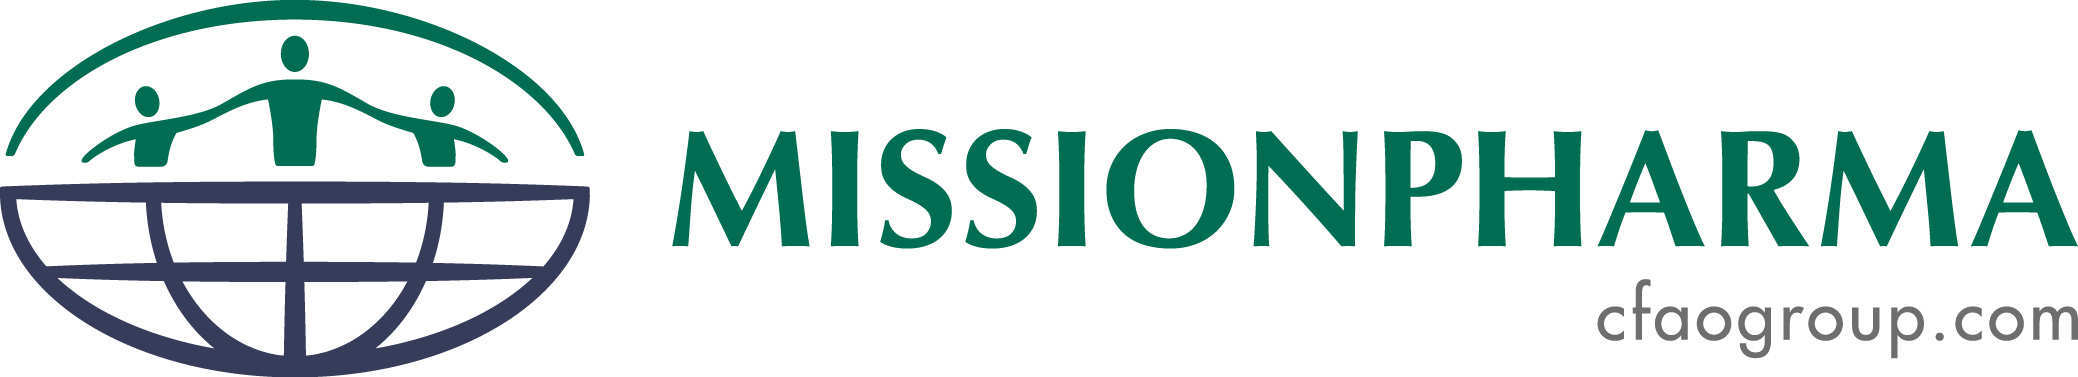 Missionpharma logo